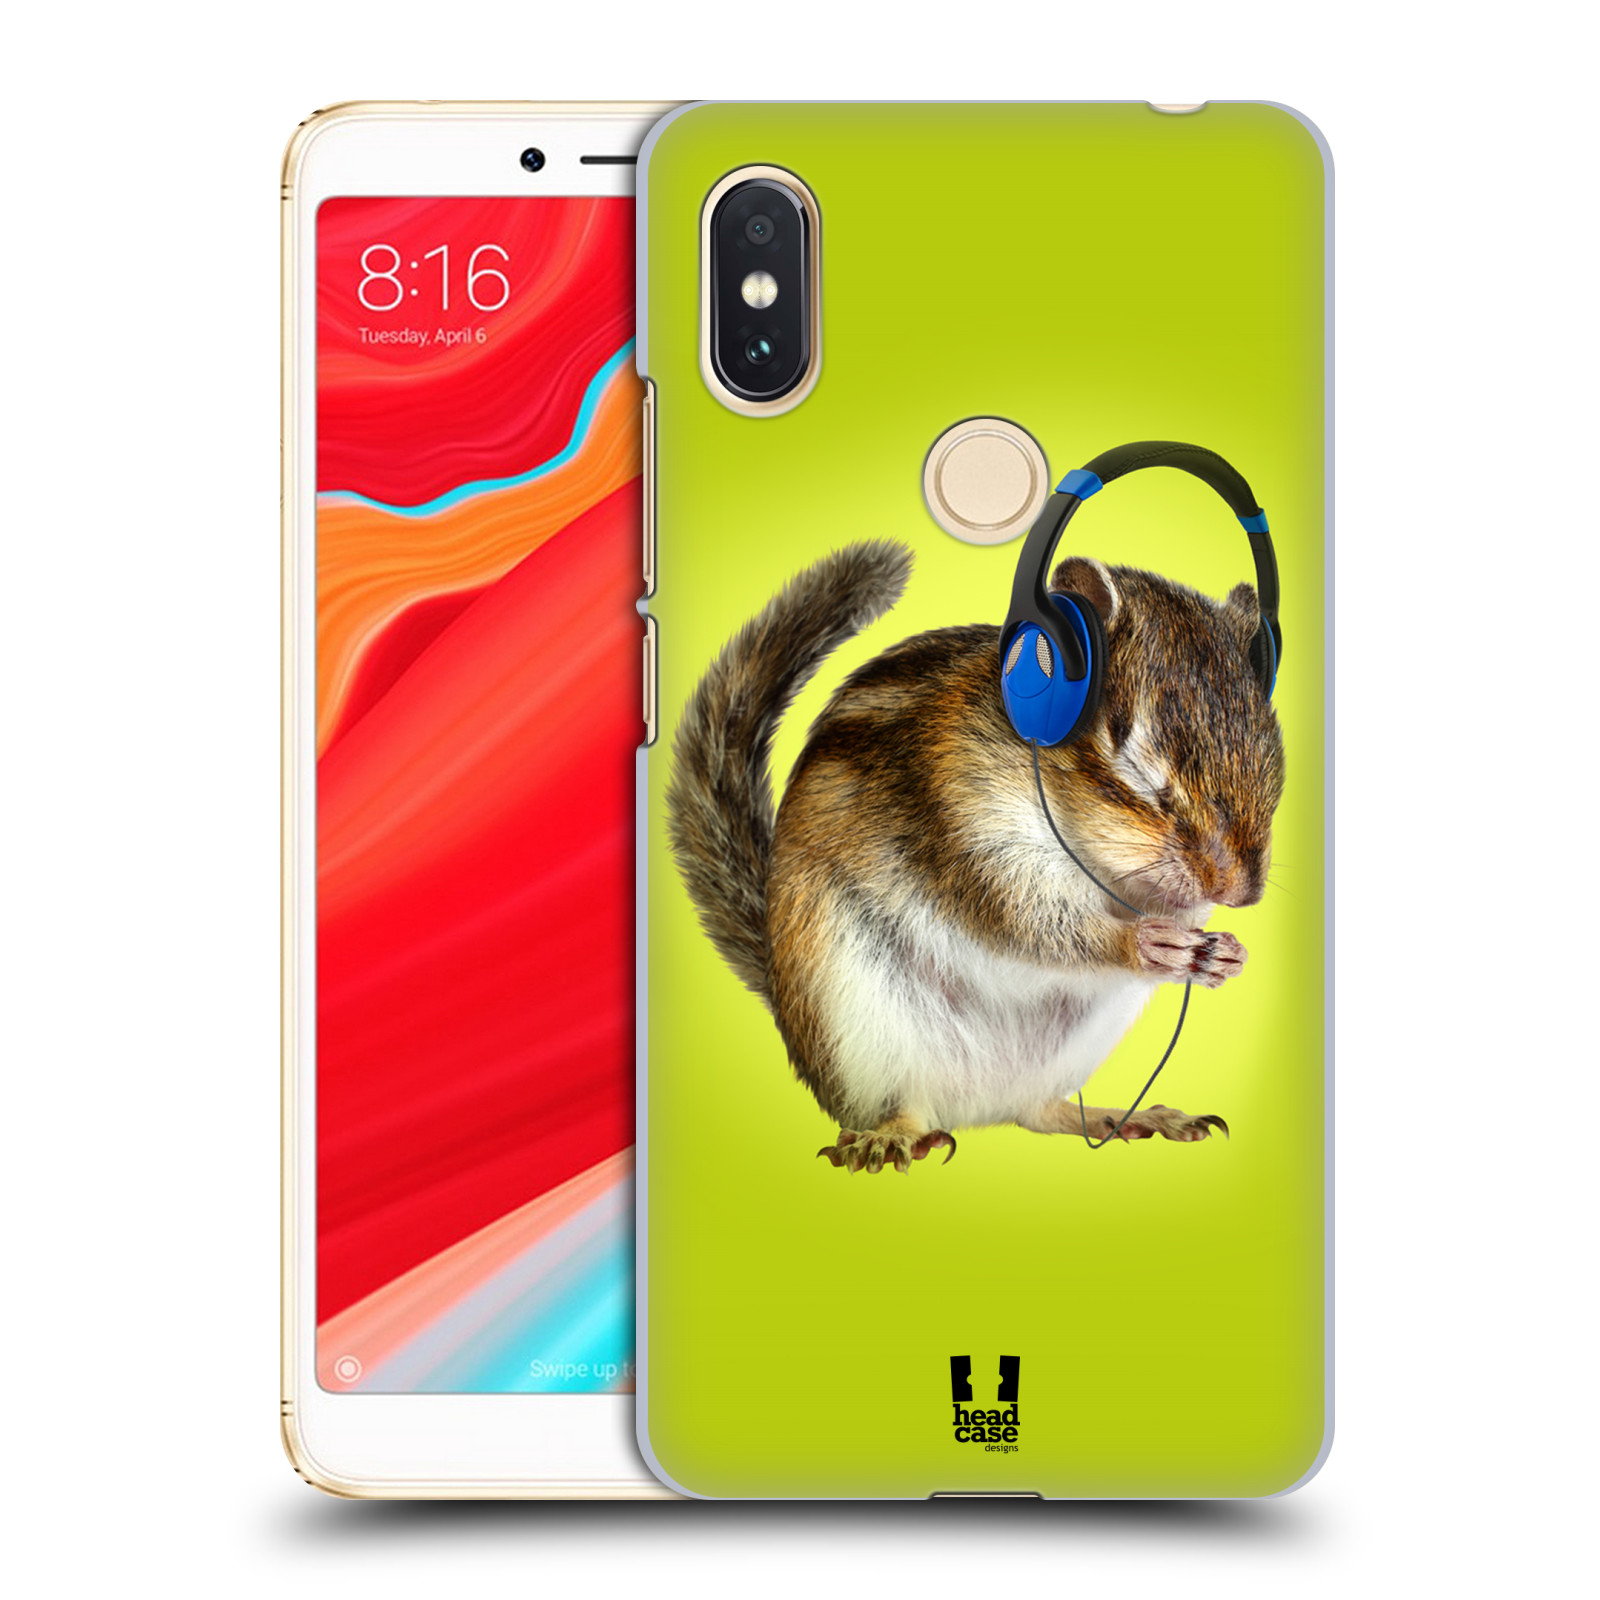 HEAD CASE plastový obal na mobil Xiaomi Redmi S2 vzor Legrační zvířátka veverka se sluchátky